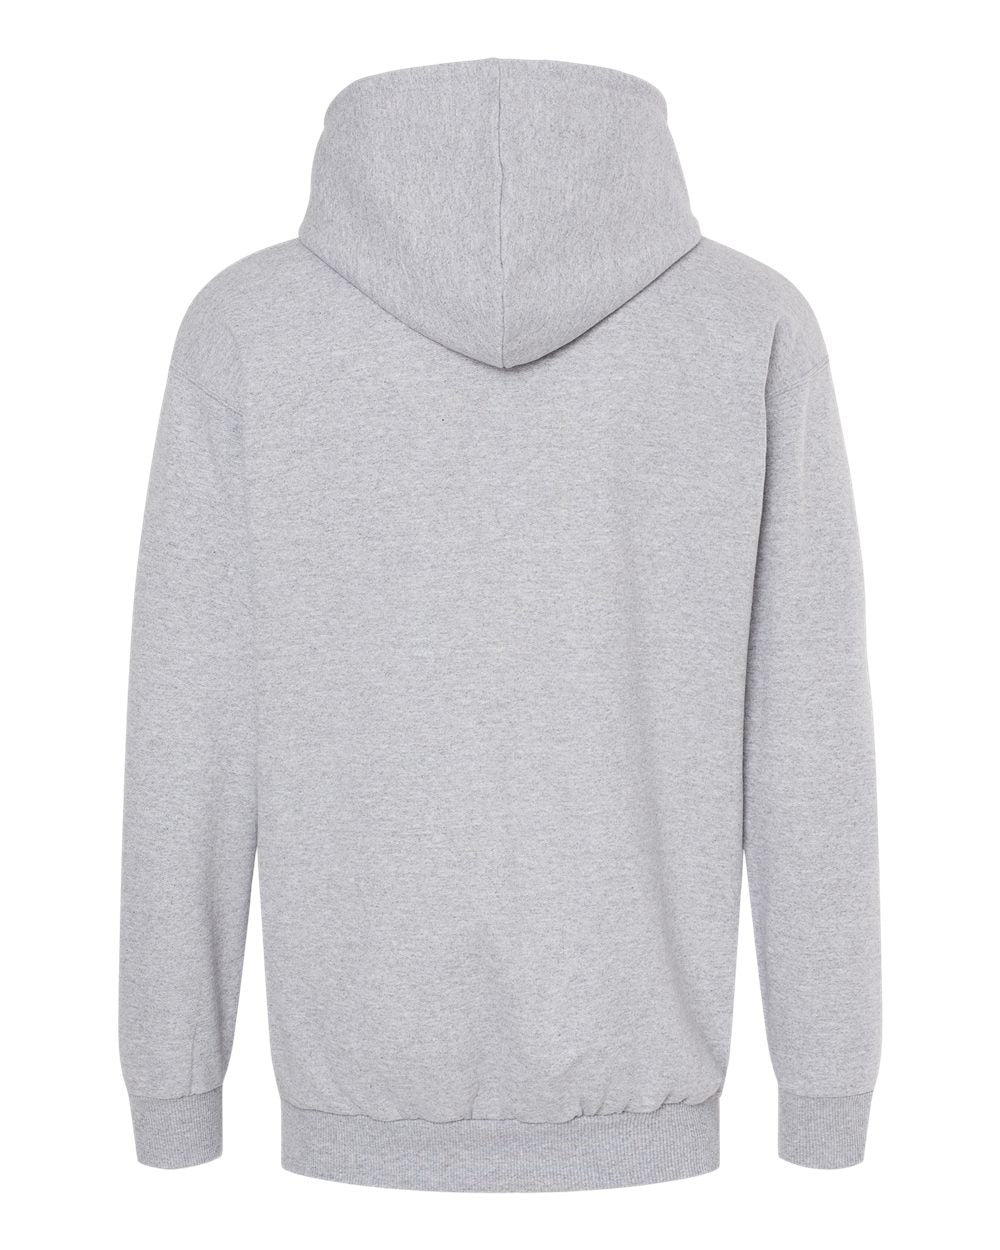 King Fashion Two-Tone Hooded Sweatshirt KF9041 #color_Sport Grey/ Navy